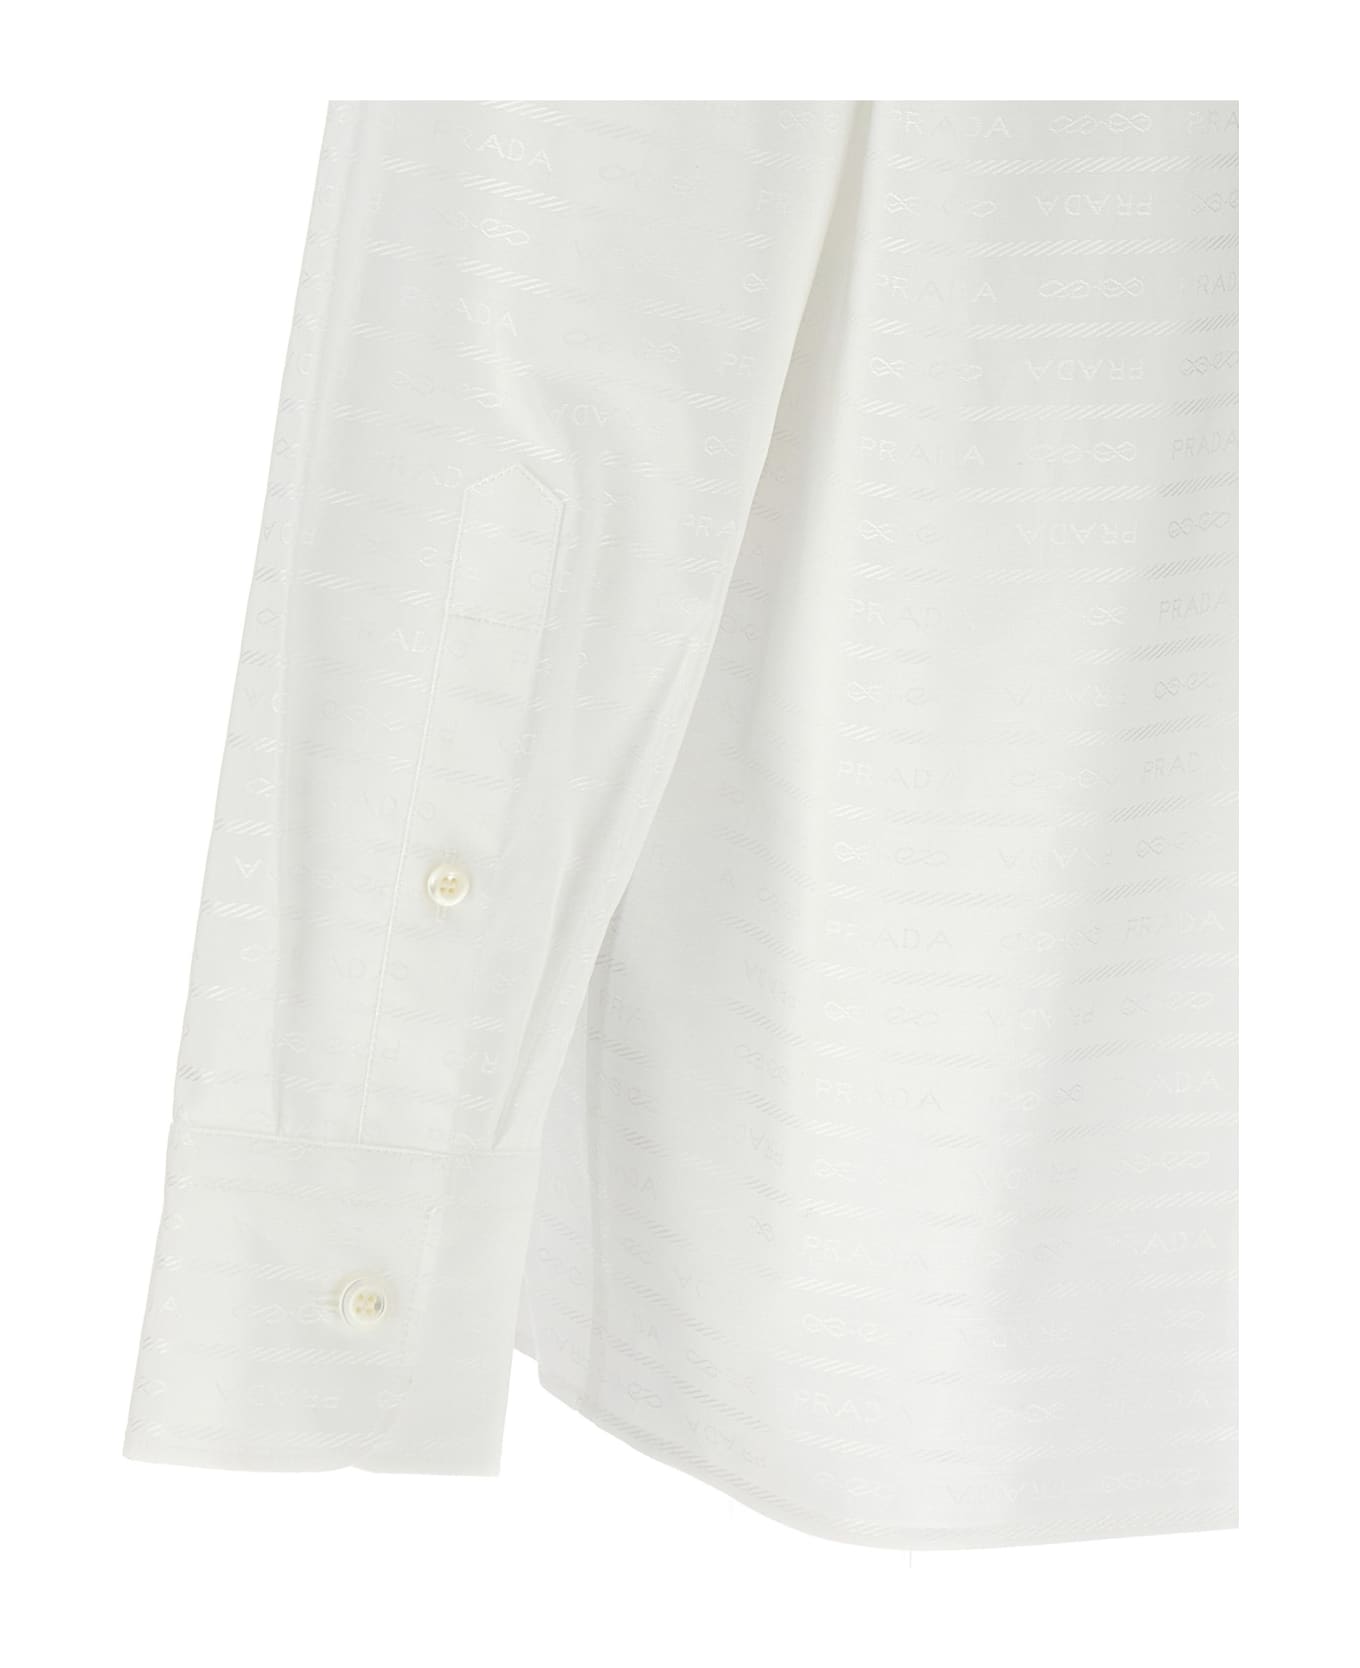 Prada Jacquard Logo Shirt - Bianco シャツ